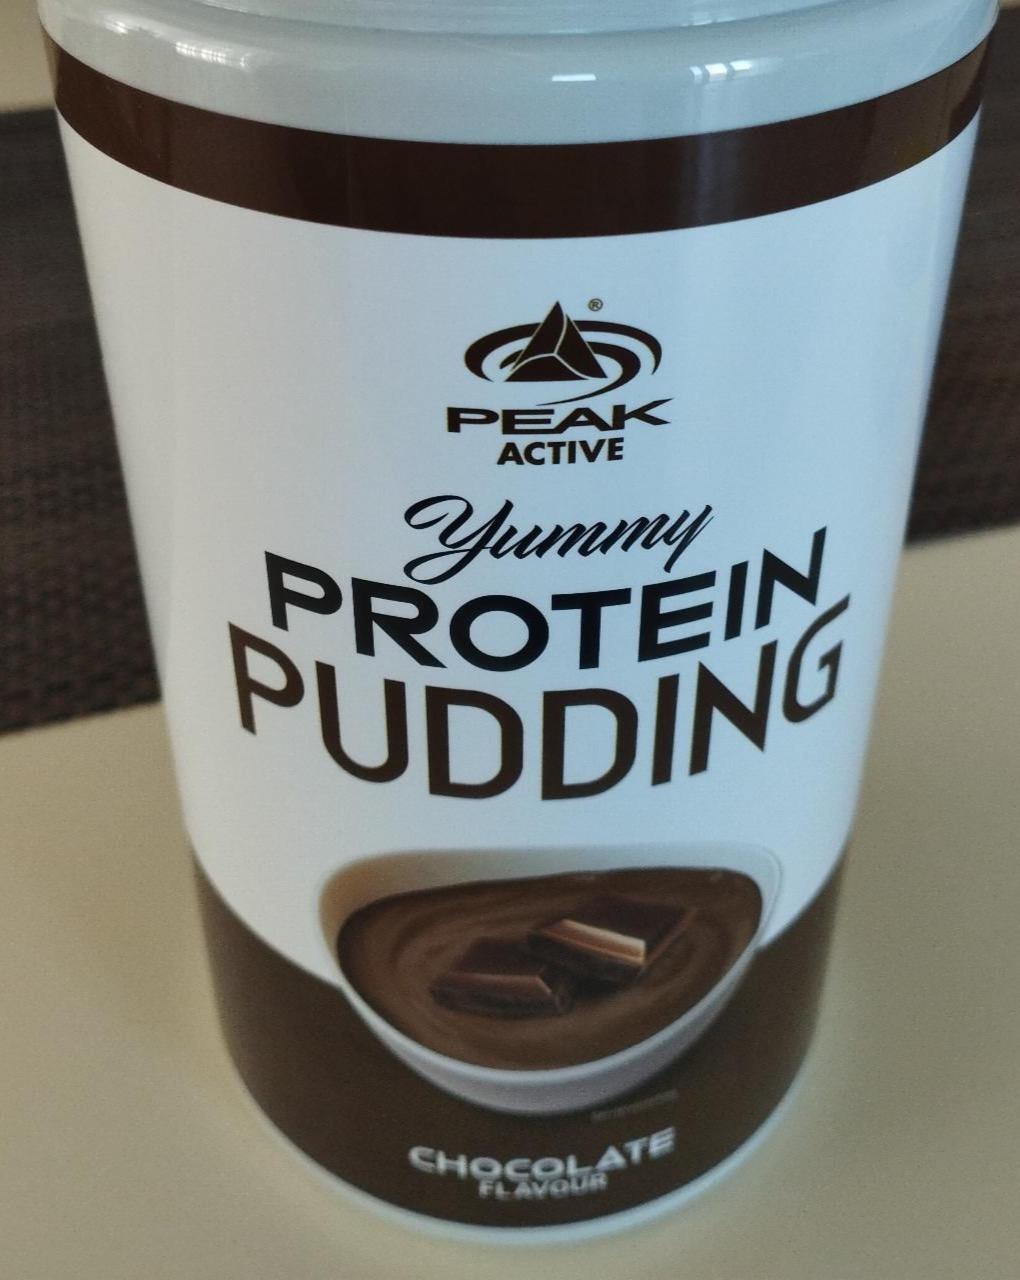 Képek - Yummy Protein pudding Chocolate Peak Active